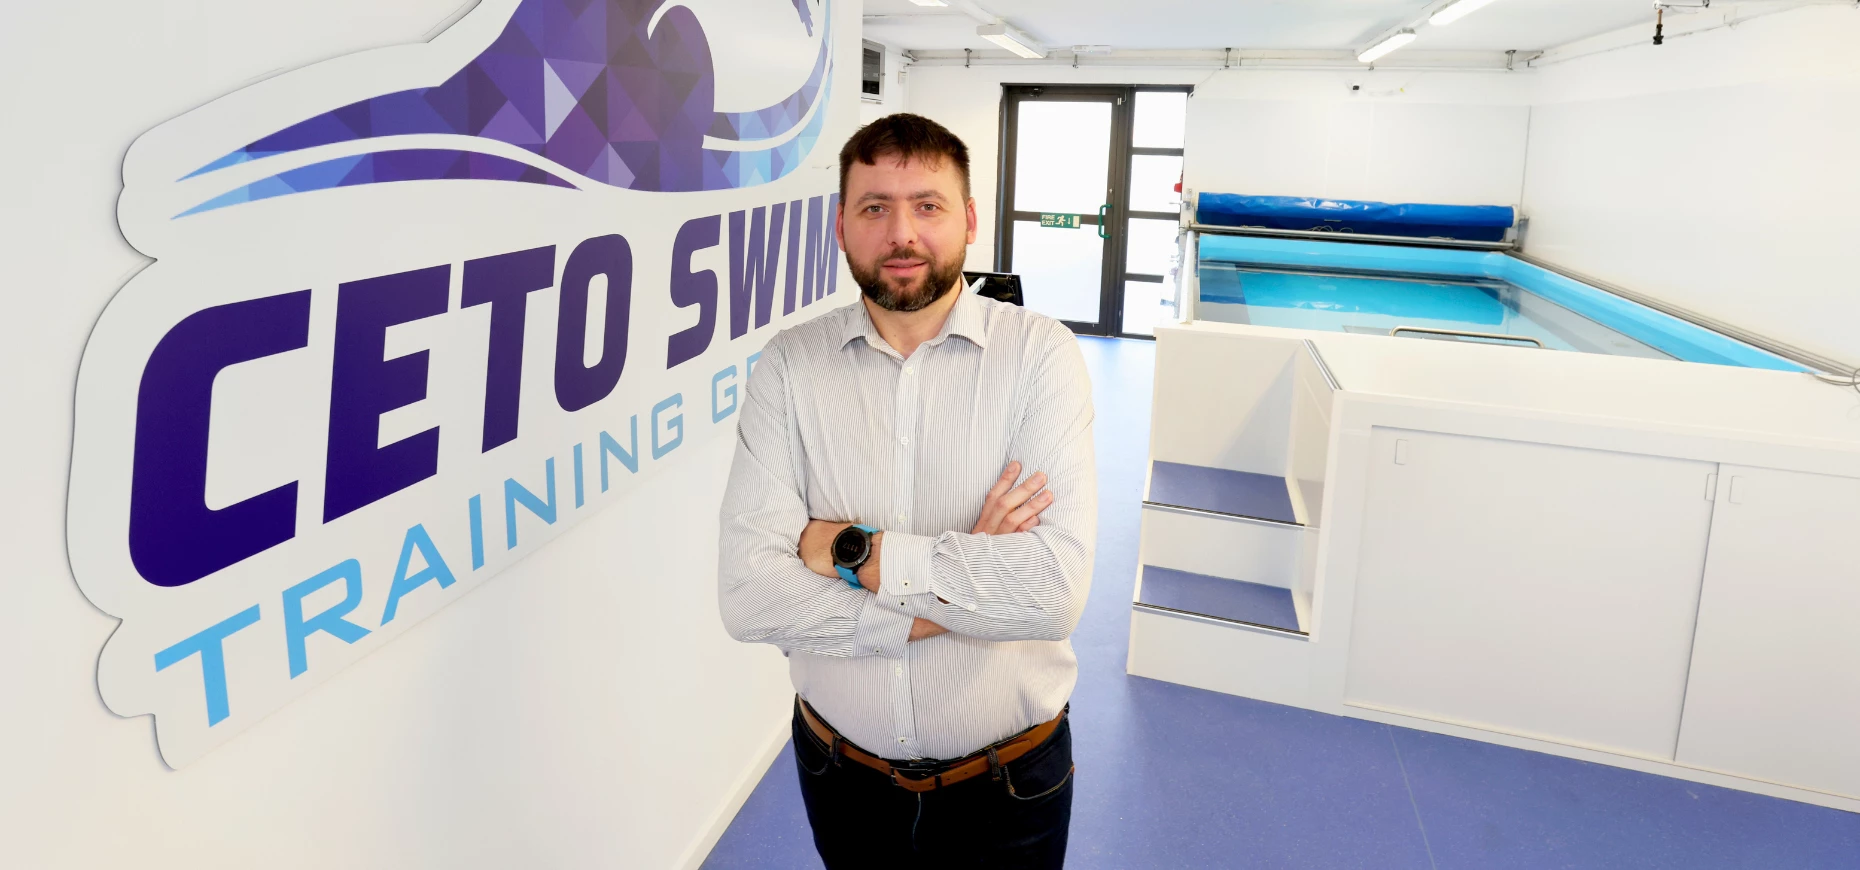 Constantin Cosmin Petcu, founder of Ceto Swim Training Group.